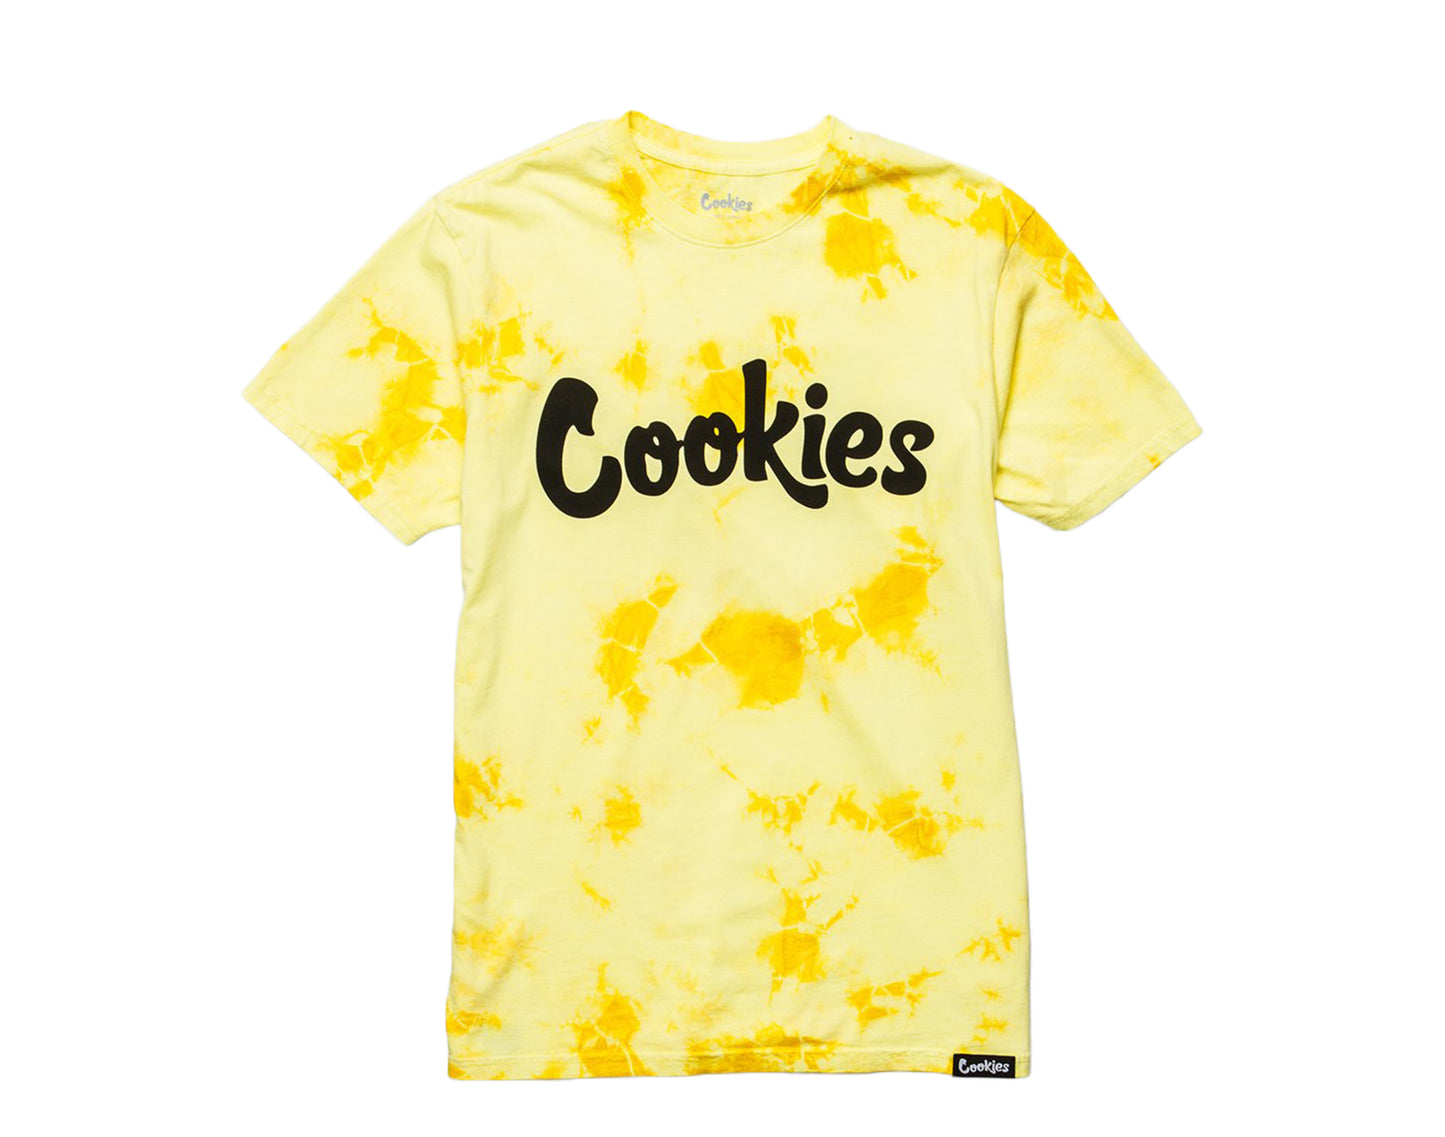 Cookies Original Logo Crystal Wash Tie Dye Yellow/Black T-Shirt 1544T4197-YEL